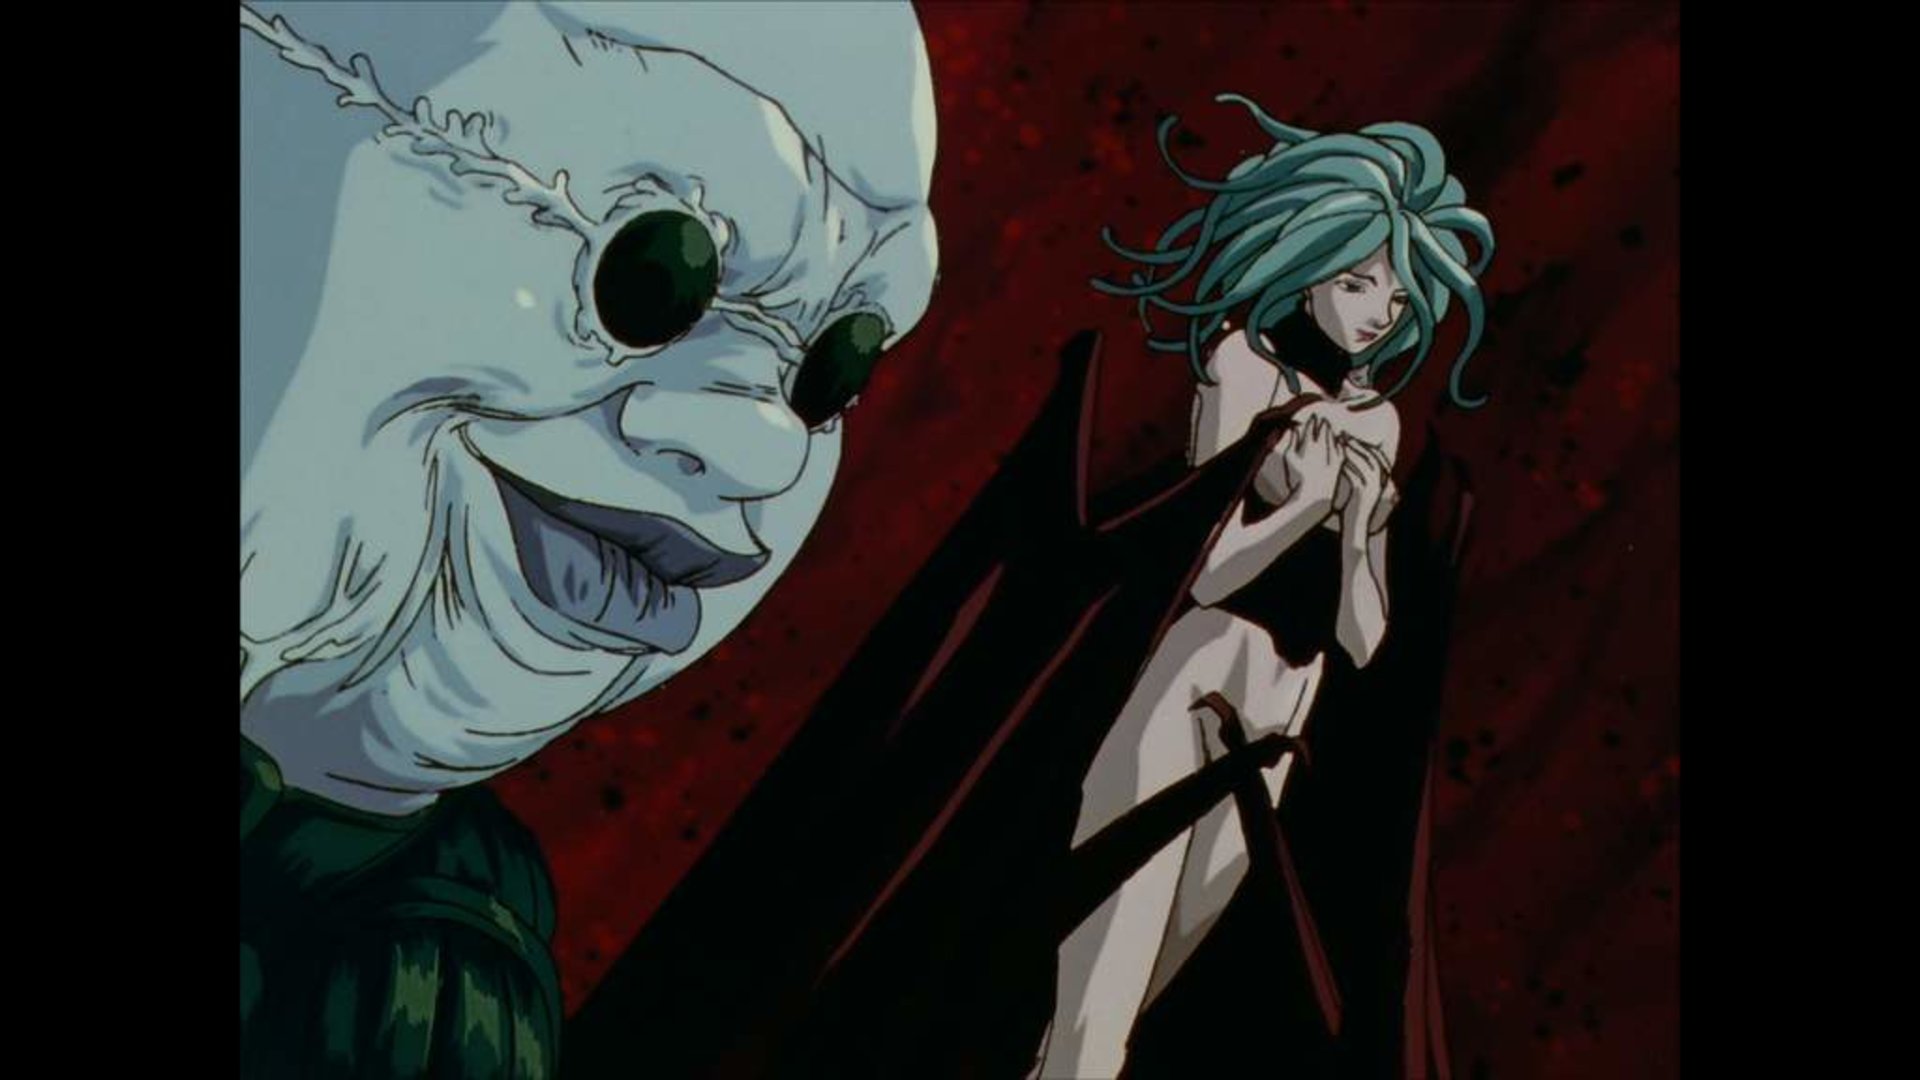 Where to Watch the Berserk (1997) Anime?